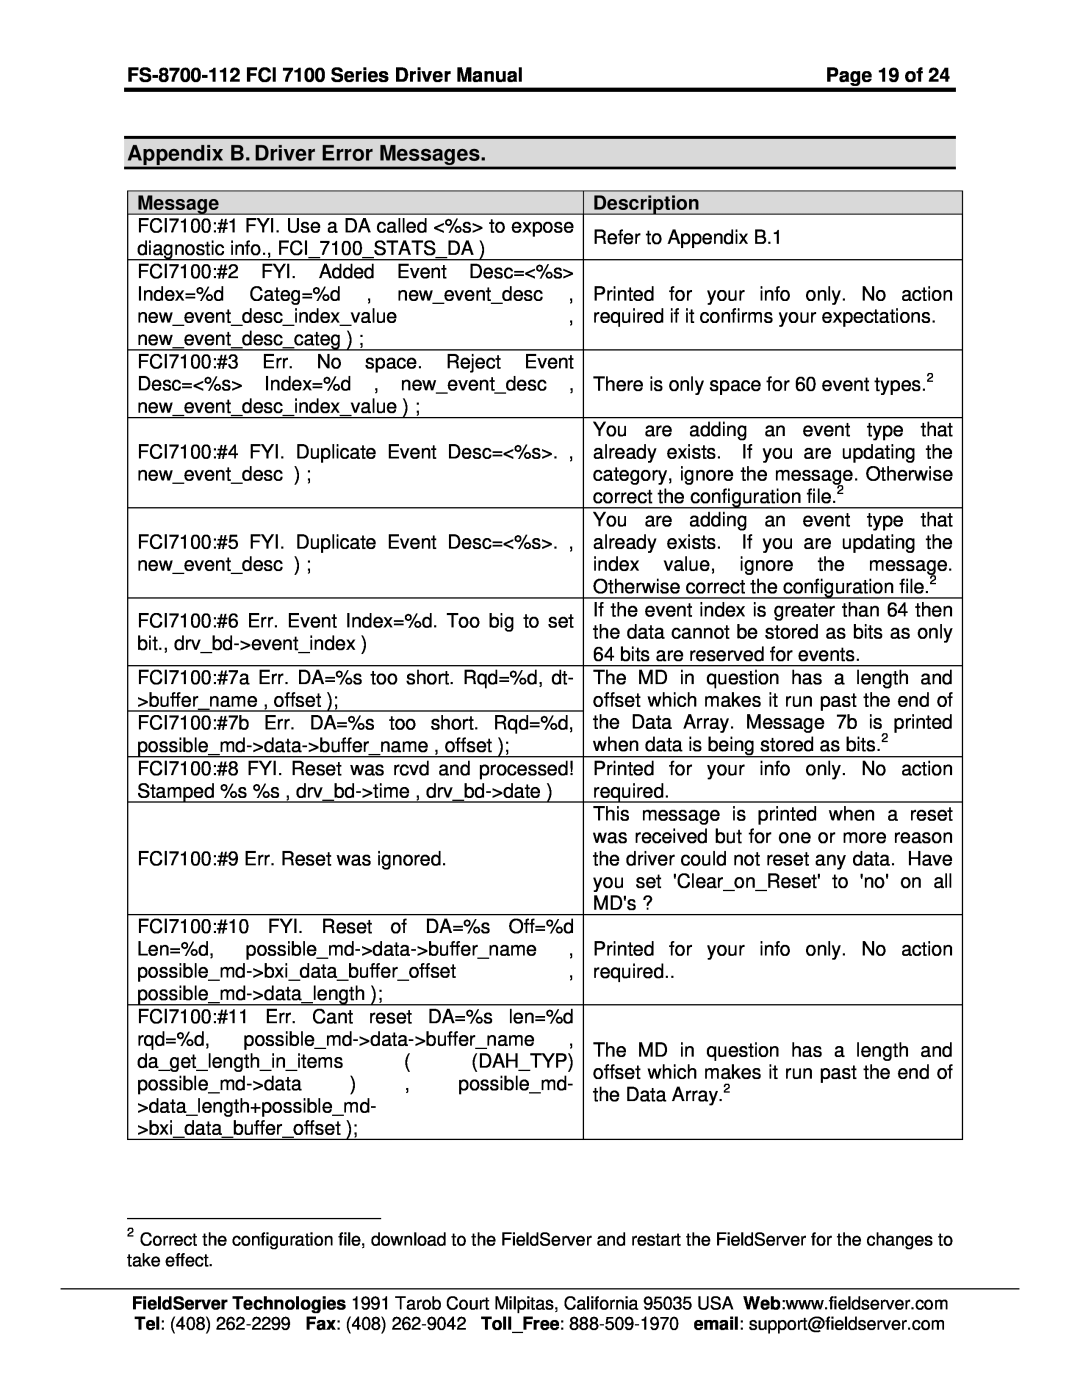 FieldServer Appendix B. Driver Error Messages, FS-8700-112 FCI 7100 Series Driver ManualPage 19 of, Description 